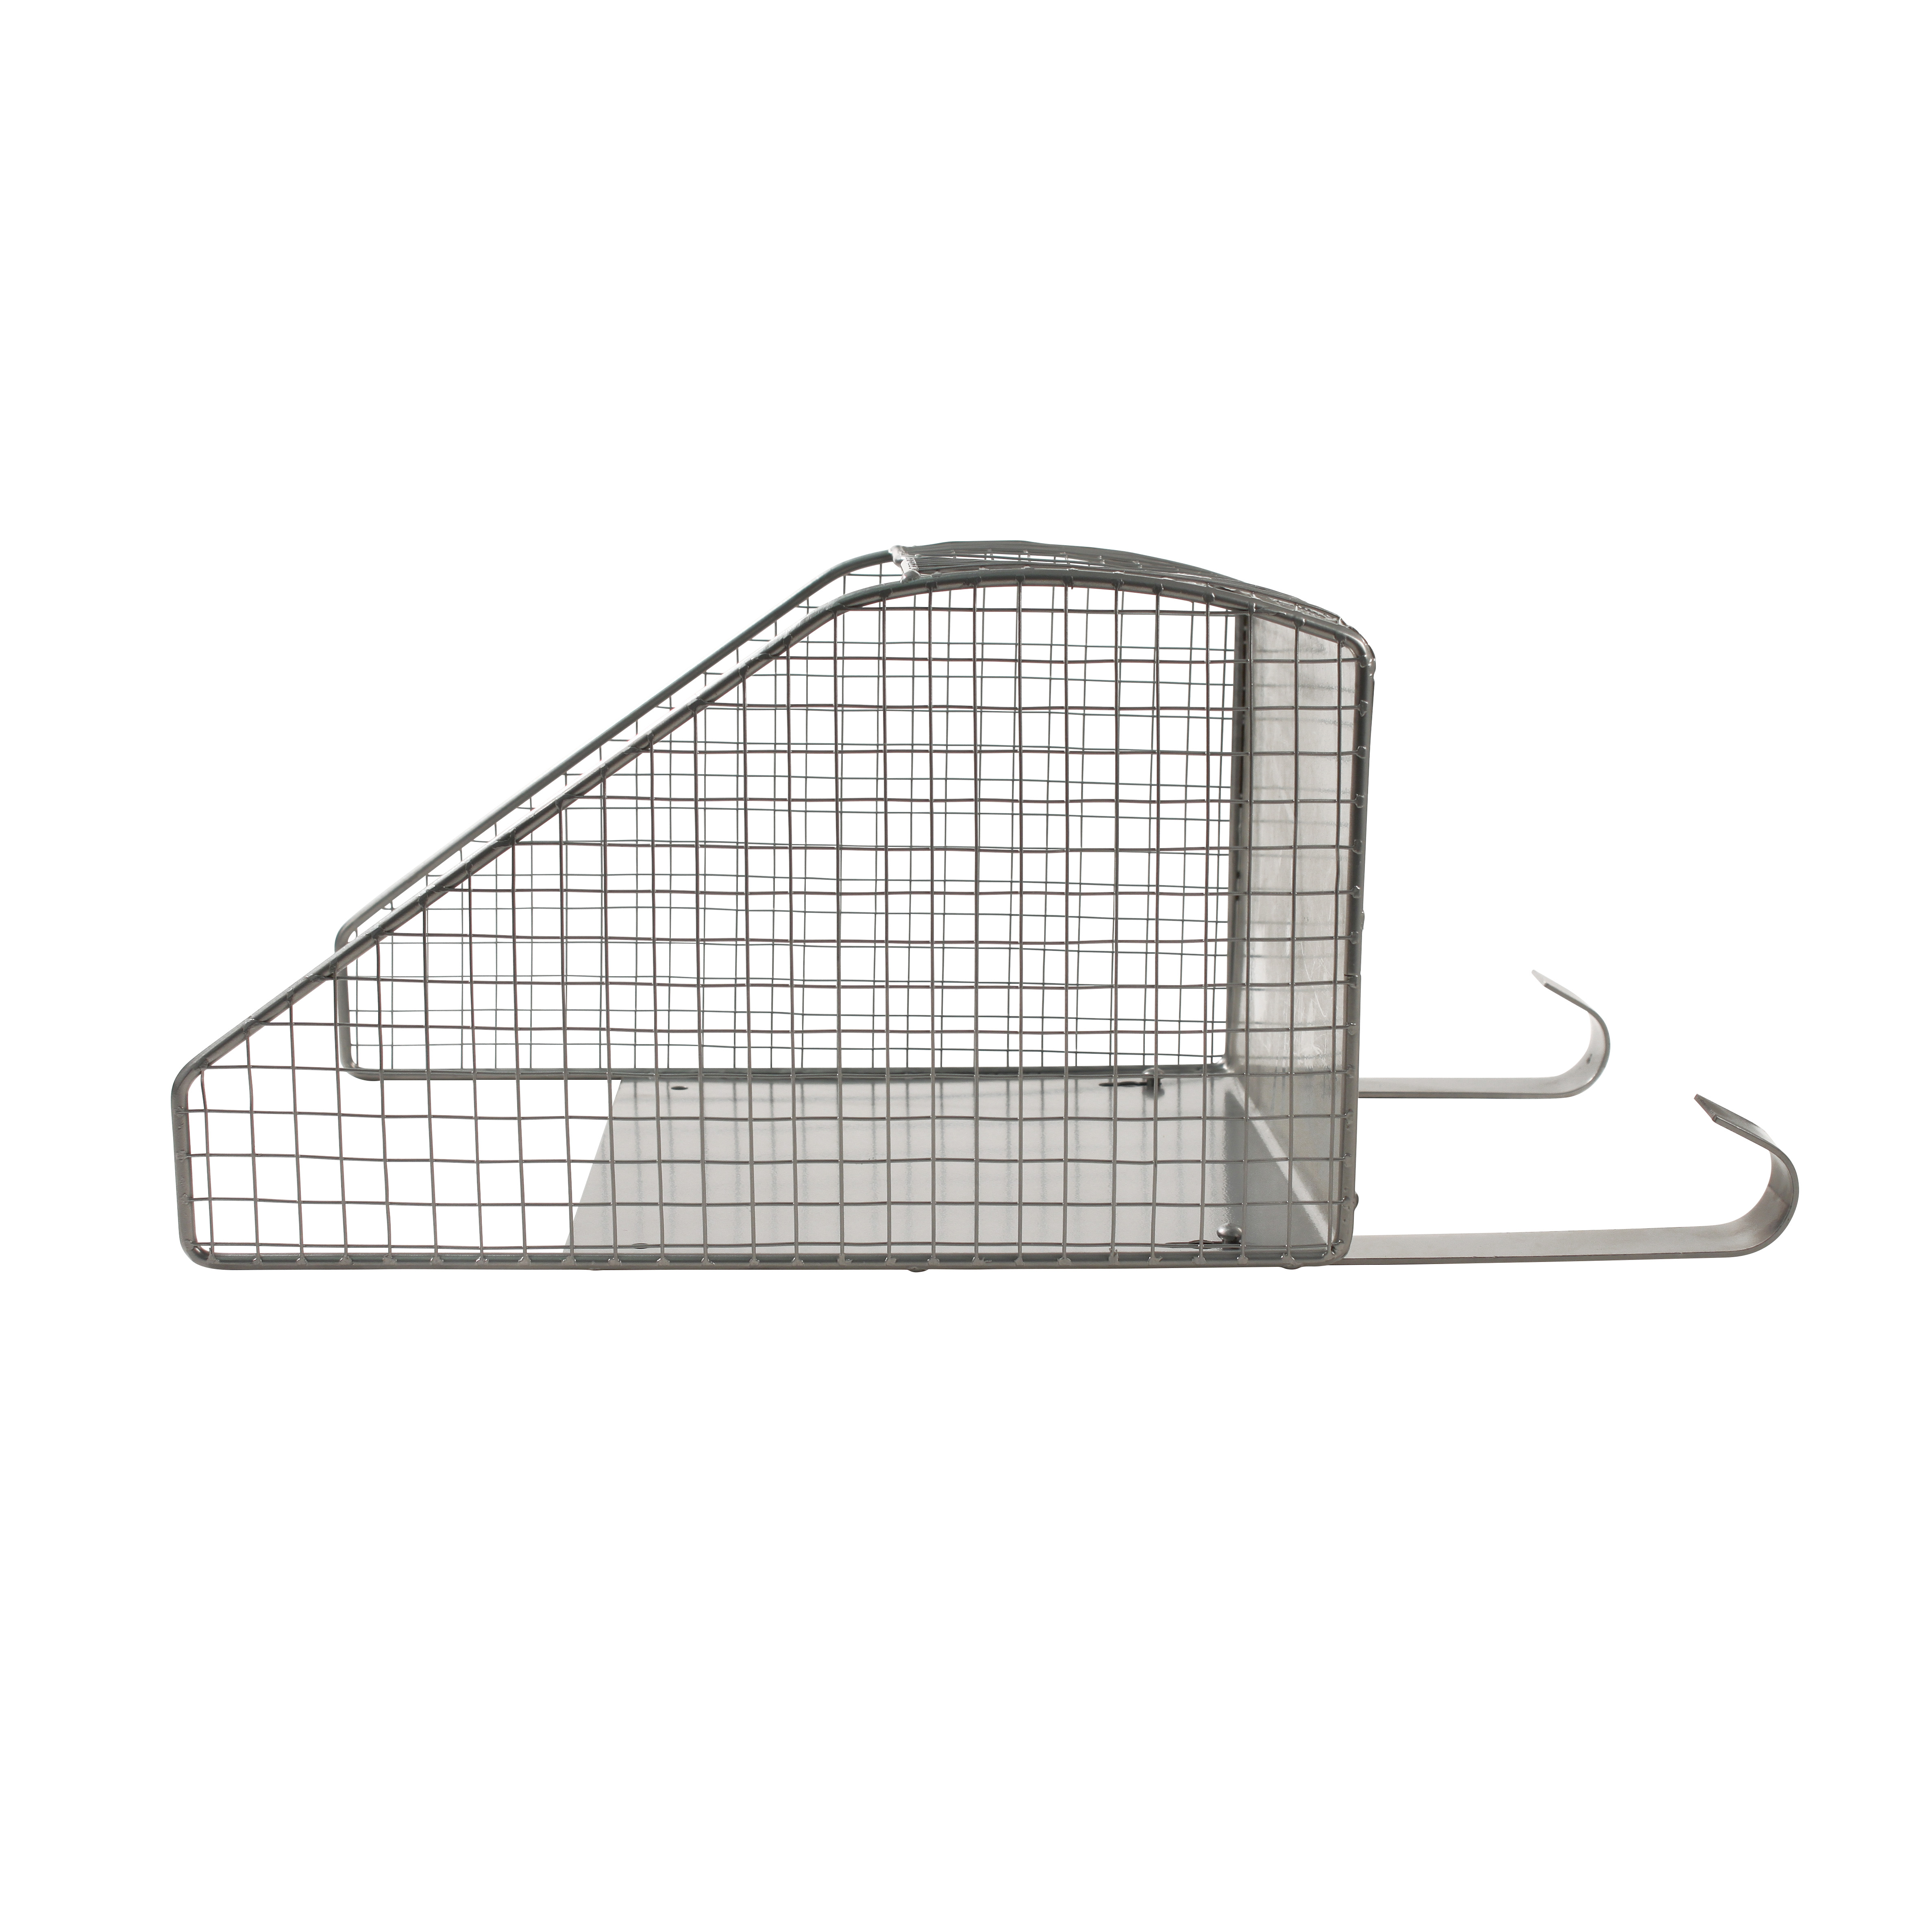 Spectrum Diversified Steel Ironing Board Holder with Storage Basket, Heat Resistant, Pewter - image 5 of 5